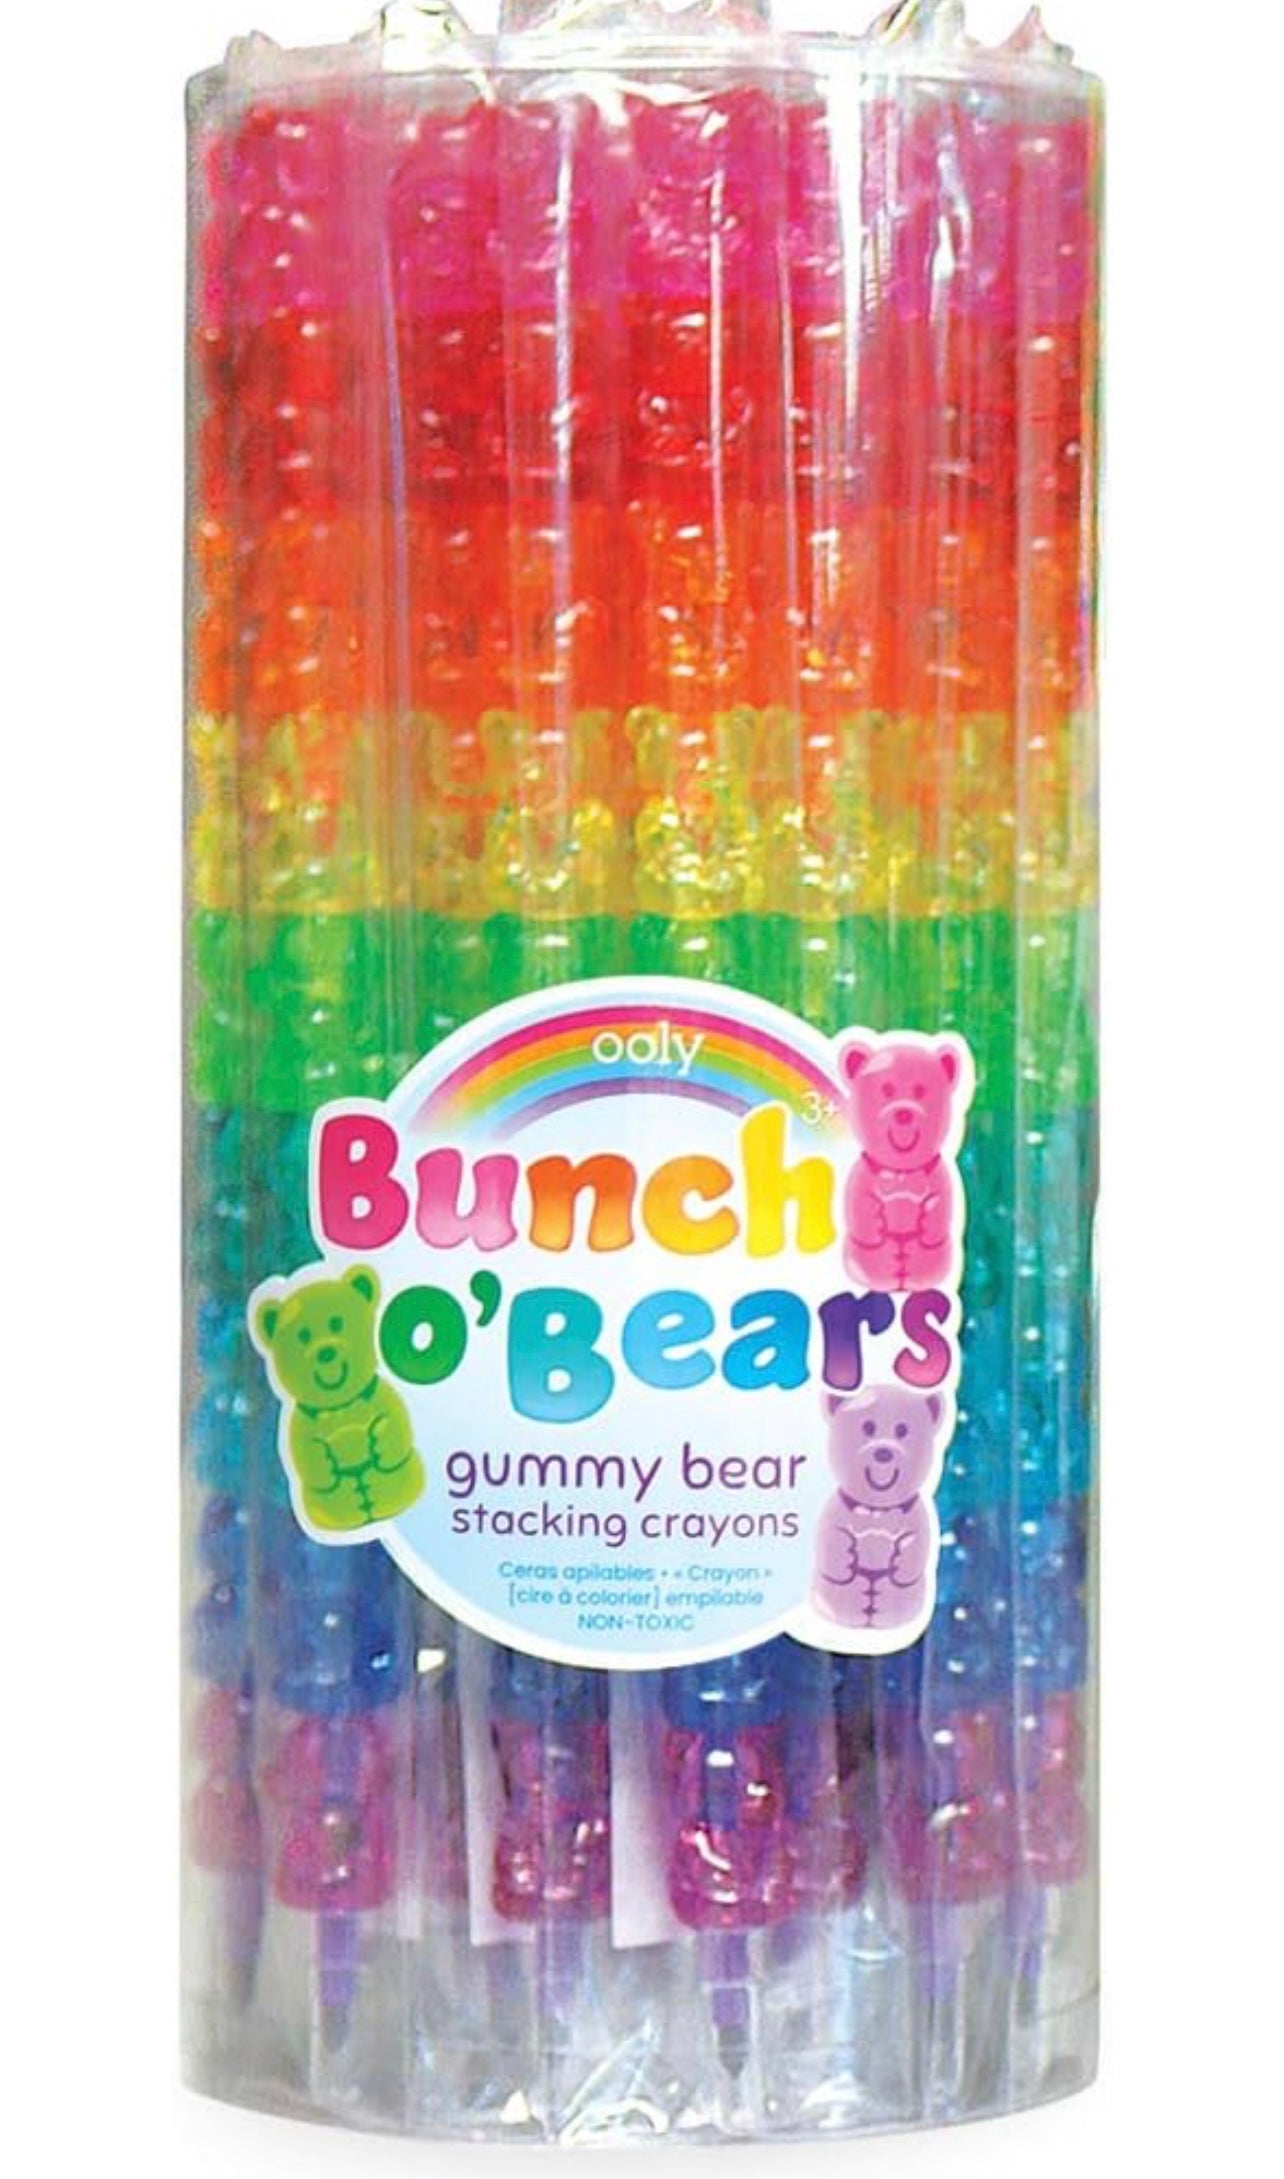 Bunch O’Bears Gummy Bear Stacking Crayons